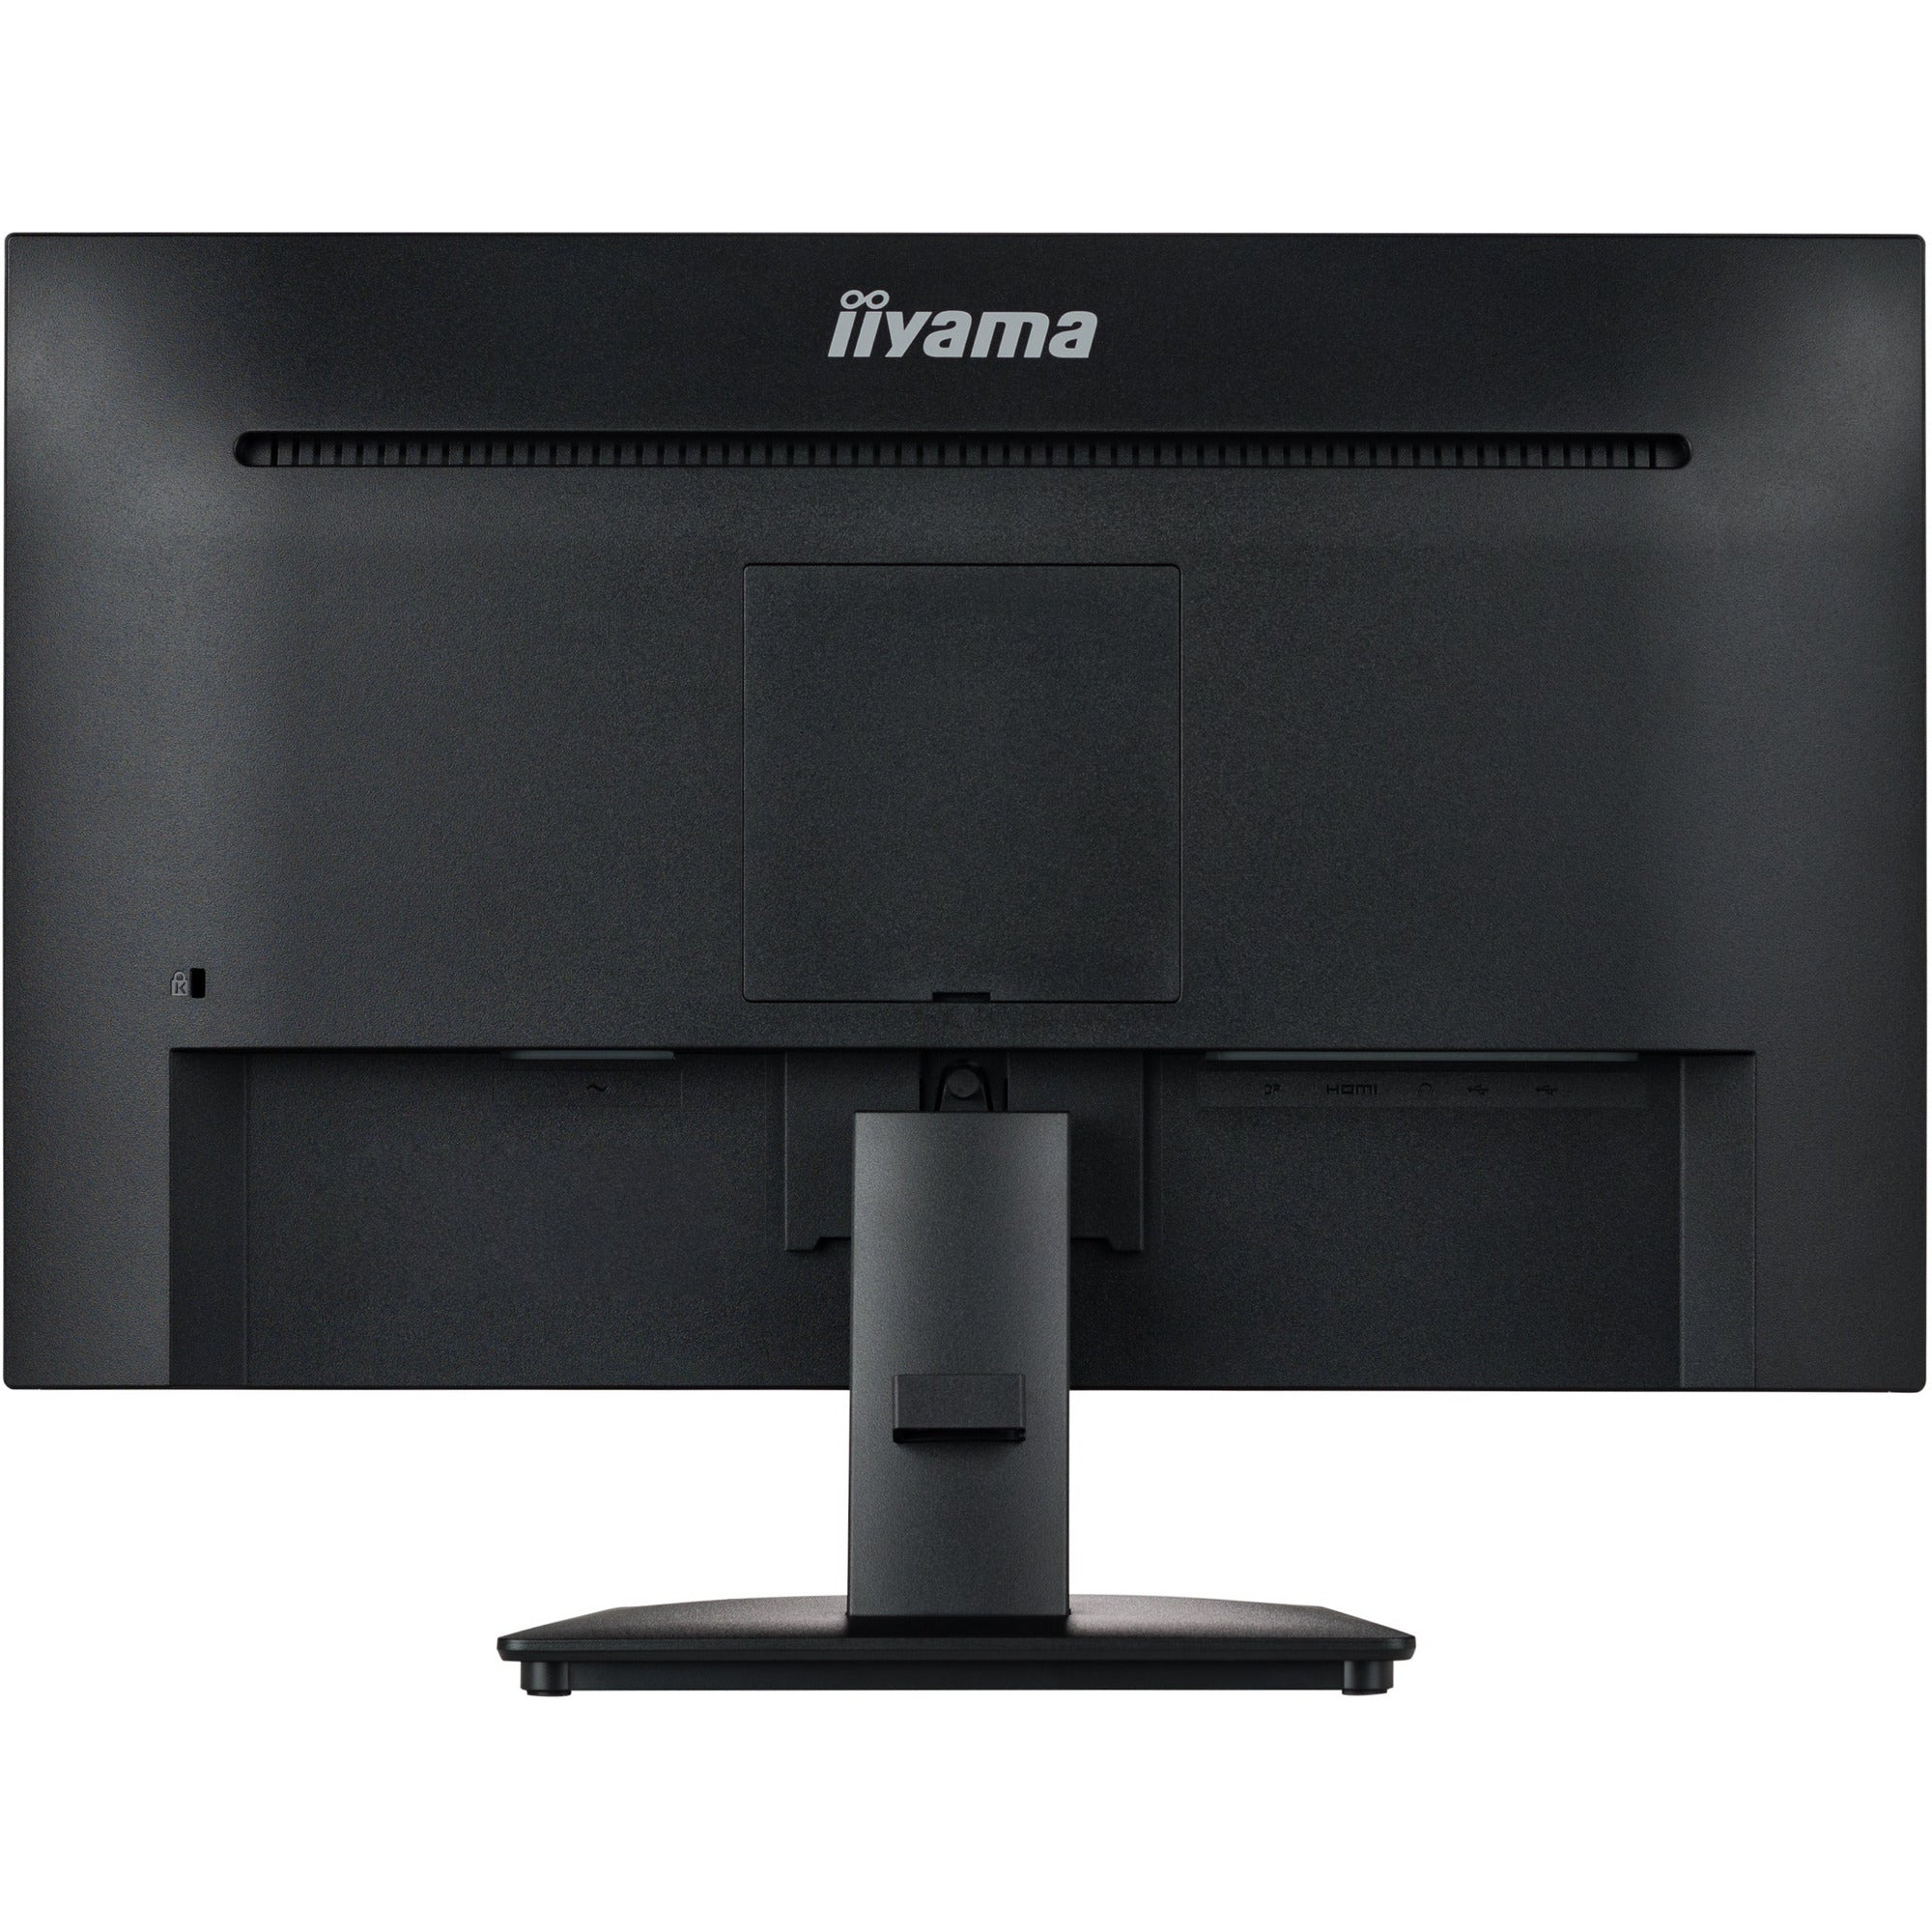 Iiyama ProLite XU2494HSU-B2 24” Full HD VA monitor with Fixed Stand